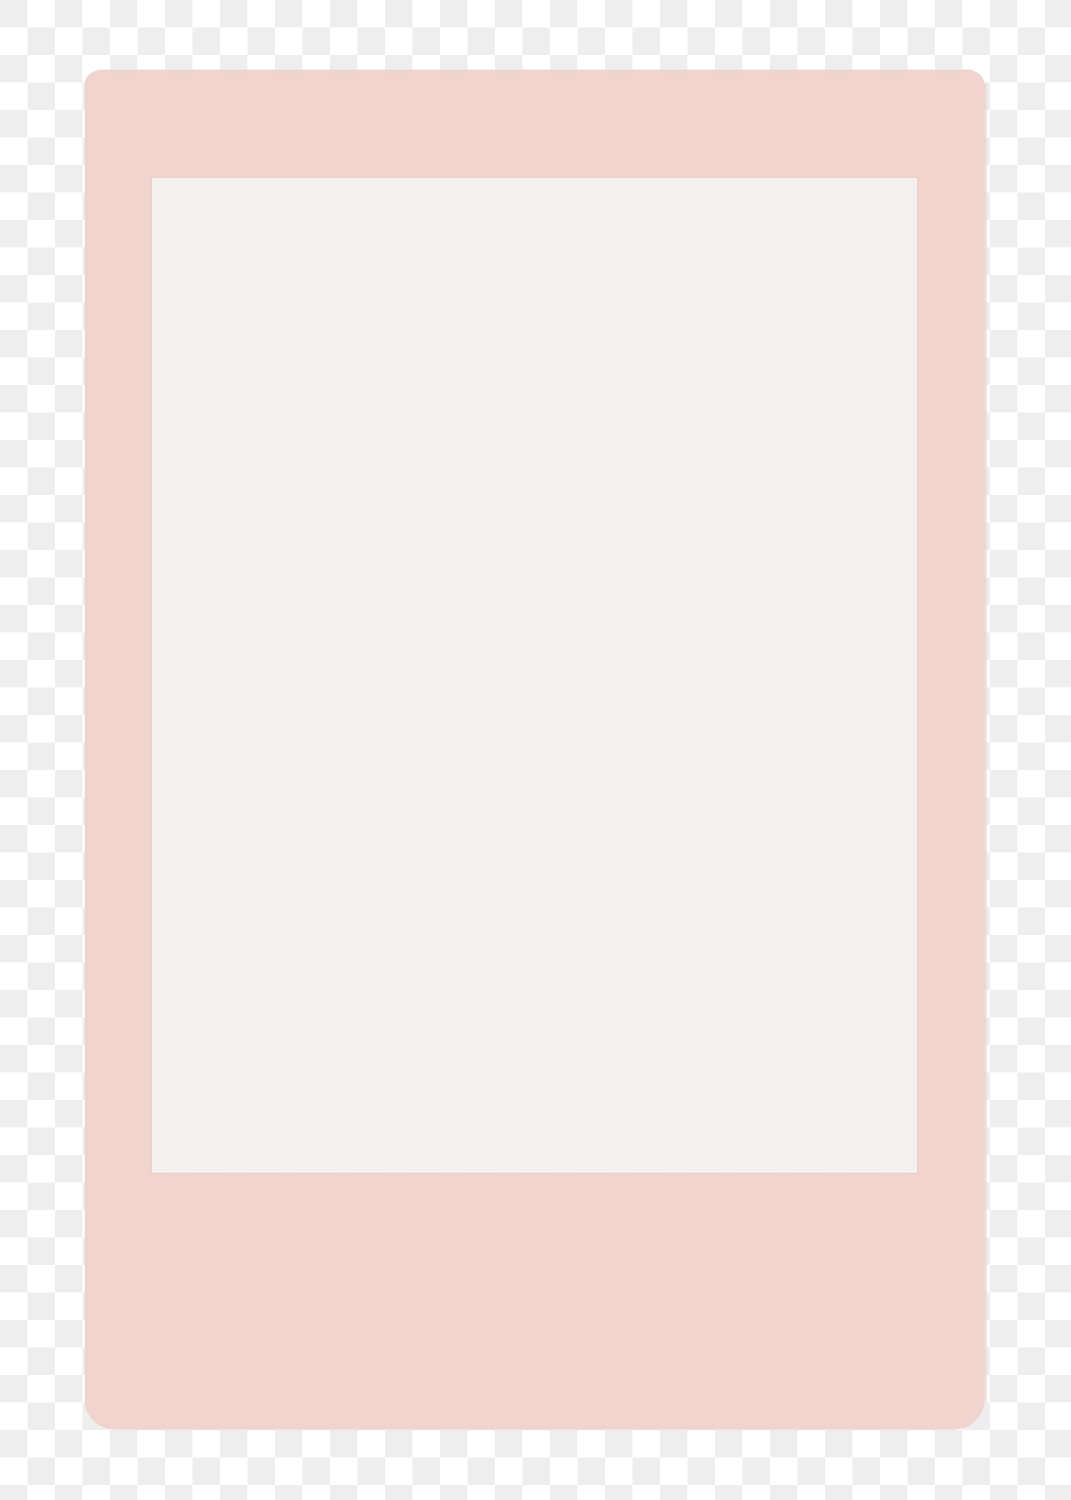 Pastel pink instant photo frame | Premium PNG - rawpixel